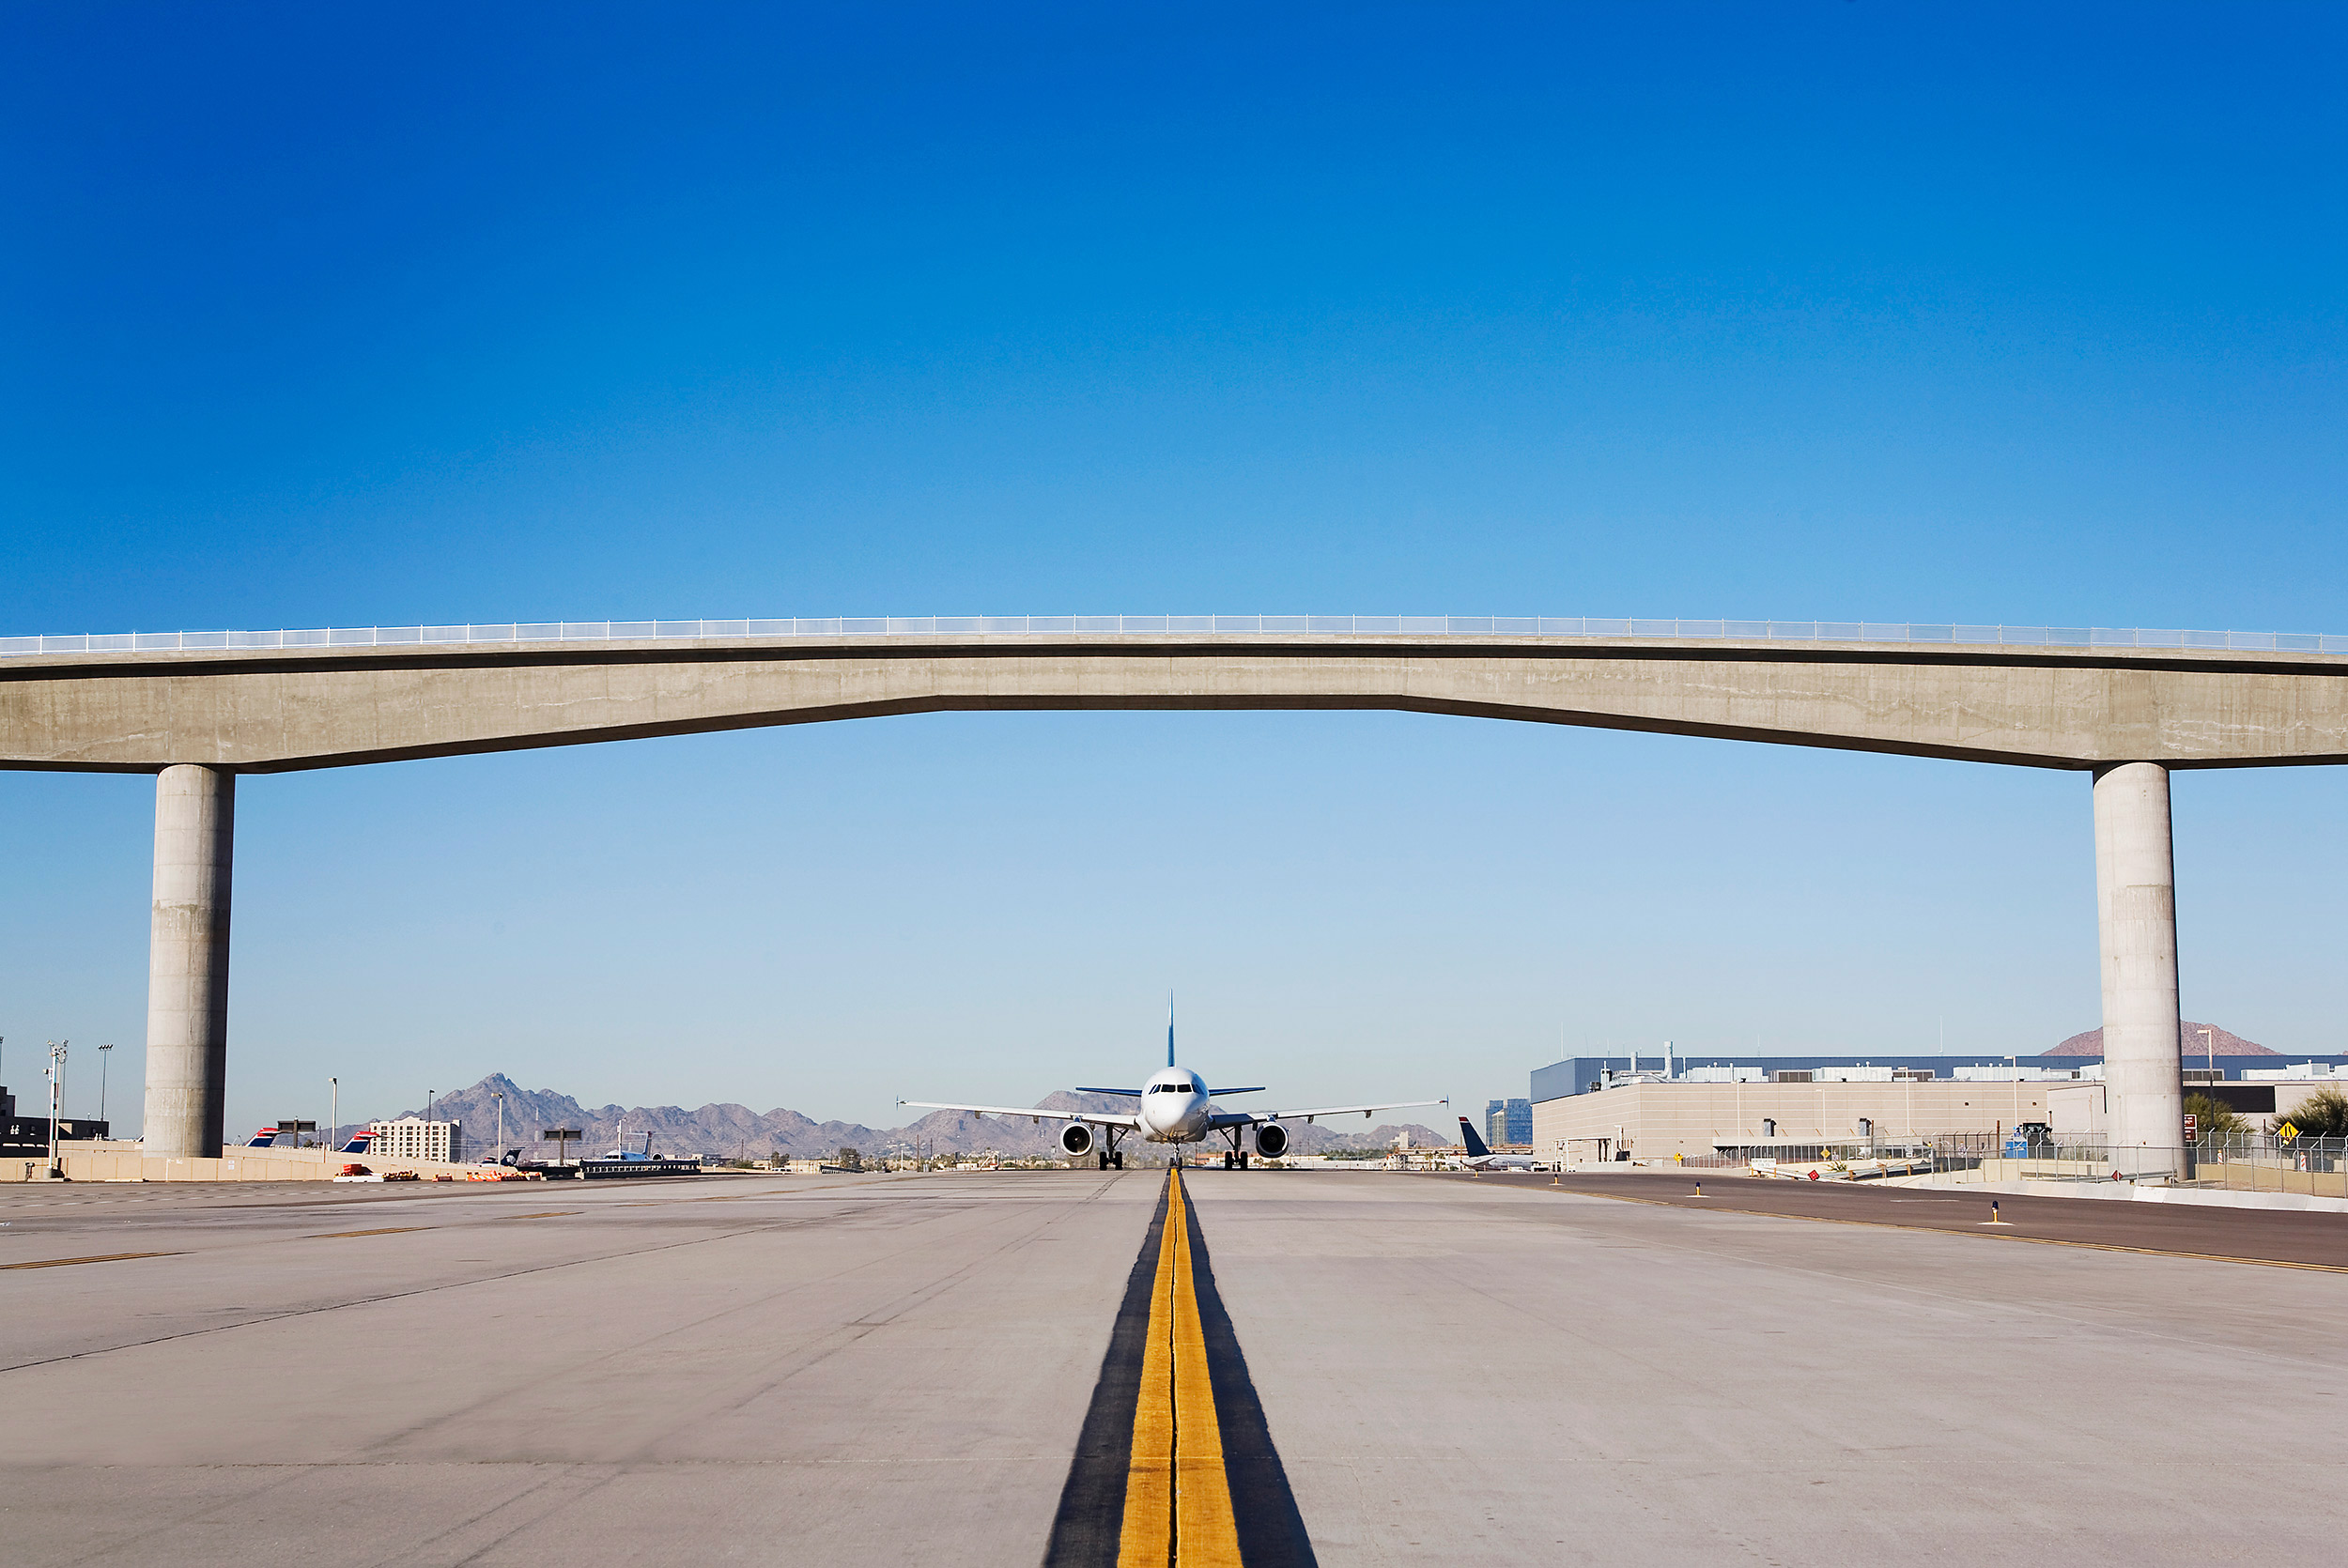 Bombardier - Steve Craft Photography, Phoenix, Arizona based Advertising, Aviation & Editorial Photographer